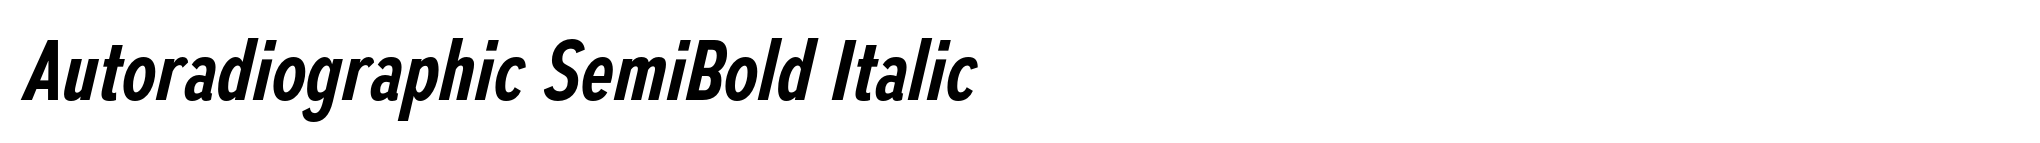 Autoradiographic SemiBold Italic image